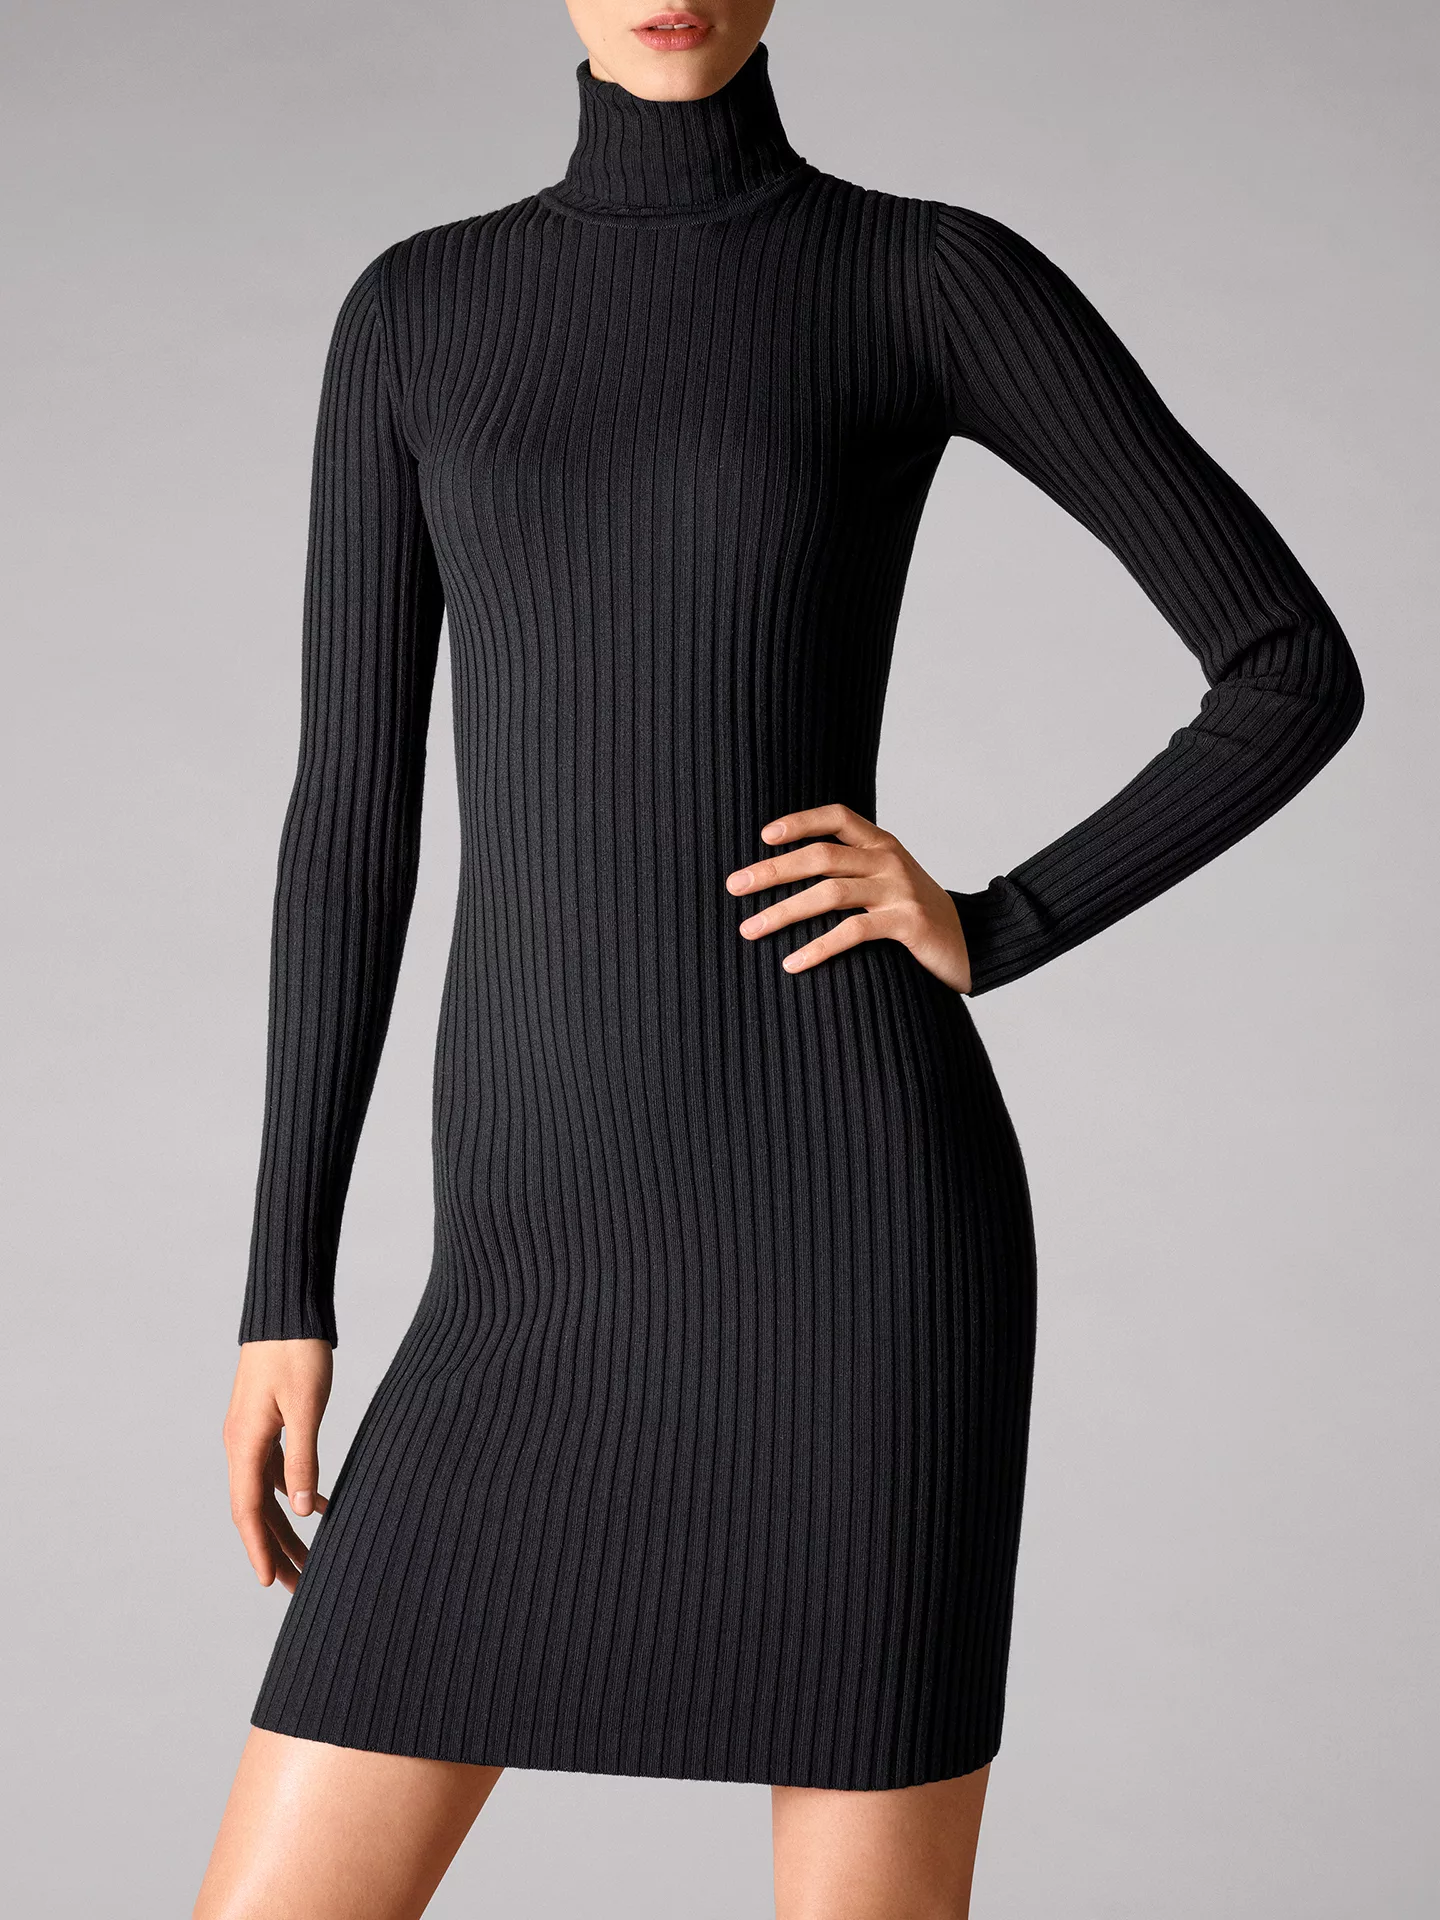 Wolford - Merino Rib Dress, Frau, black, Größe: S günstig online kaufen